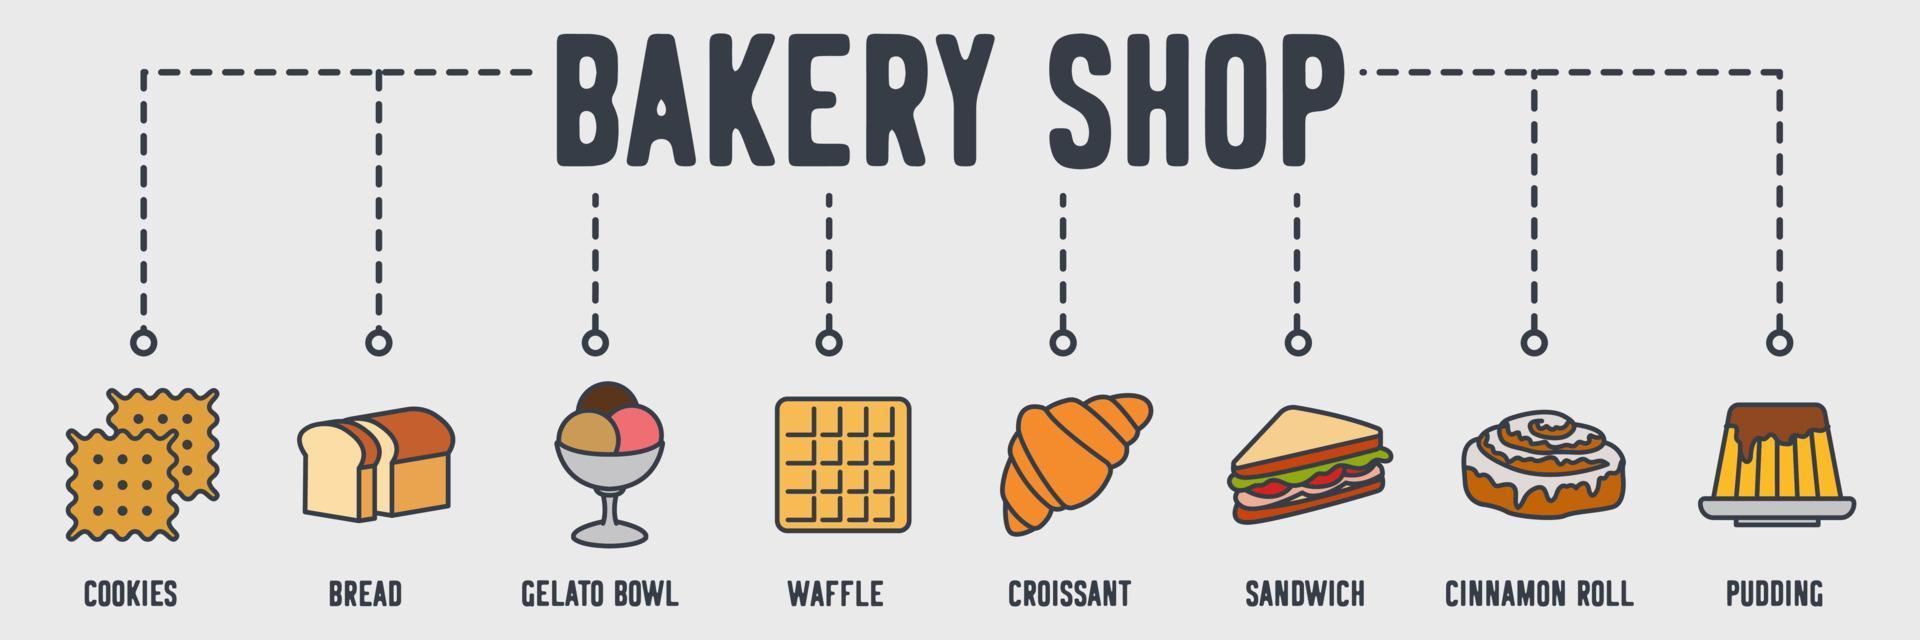 bageri butik banner webbikon. kakor, bröd, gelato skål, våffla, croissant, smörgås, kanel rulle, pudding vektor illustration koncept.